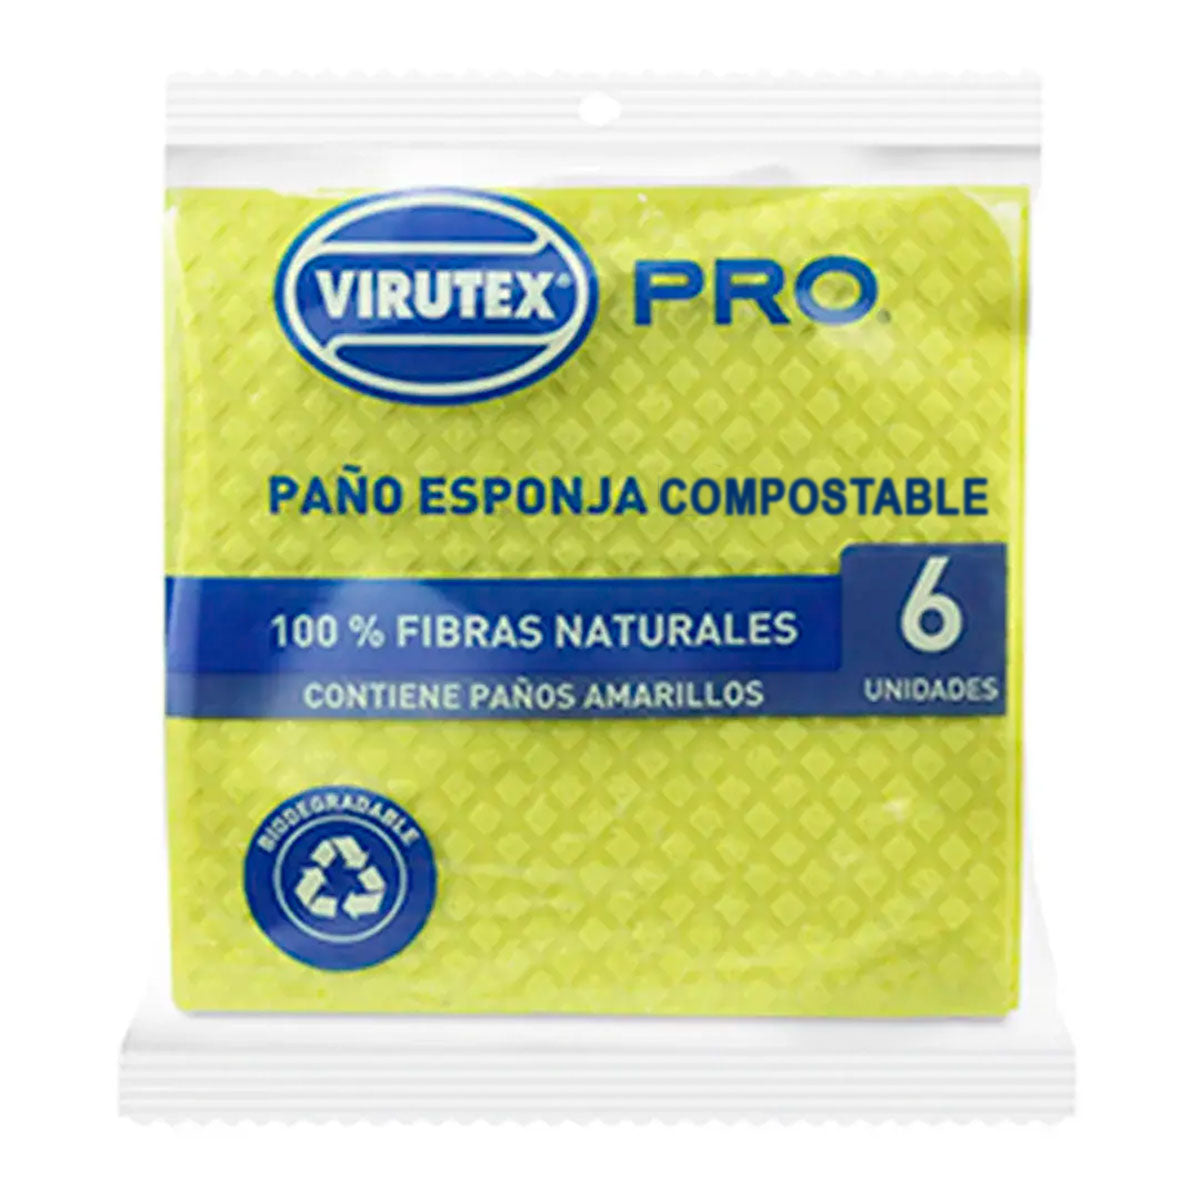 Paño Esponja Compostable 100% Fibras Naturales Virutex Pro (6 unidades)